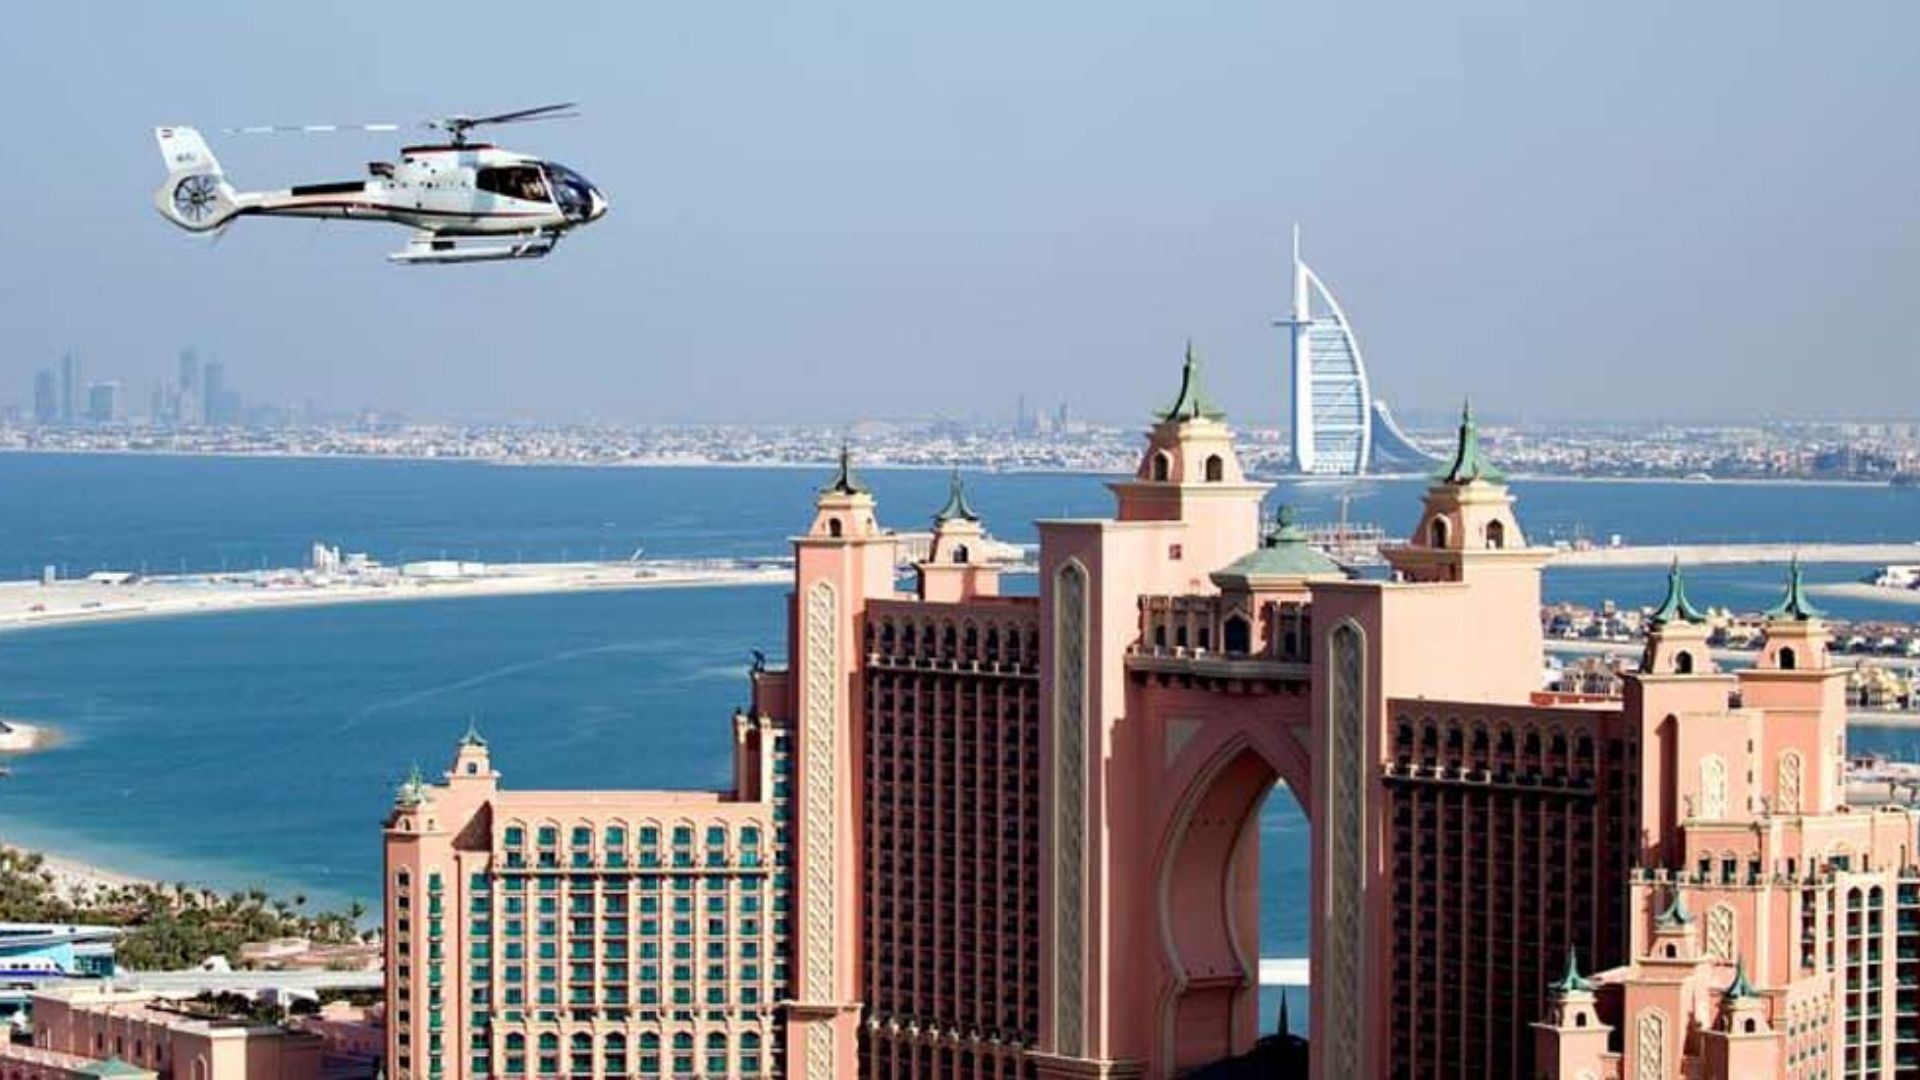 Dubai Atlantis - Helicopter ride